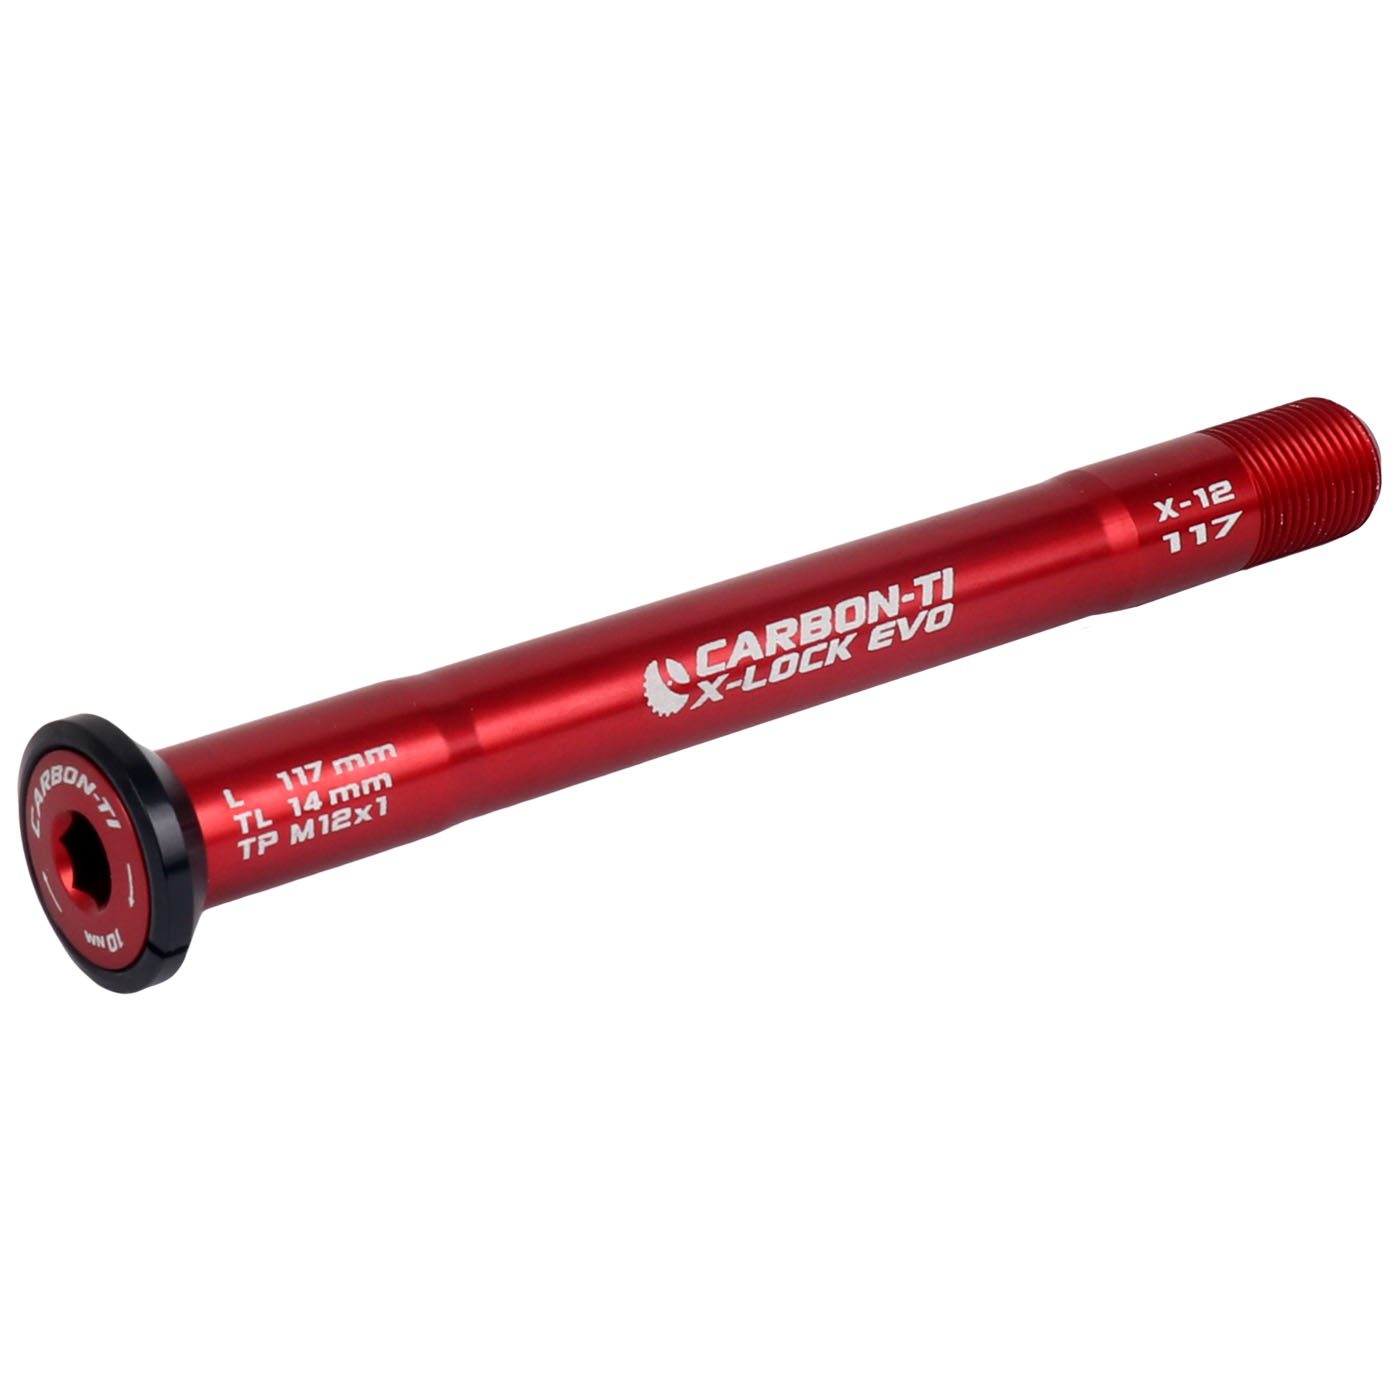 Productfoto van Carbon-Ti X-Lock EVO Thru Axle - 12x100mm - X-12 - M12x1.0mm - Length 117mm - red